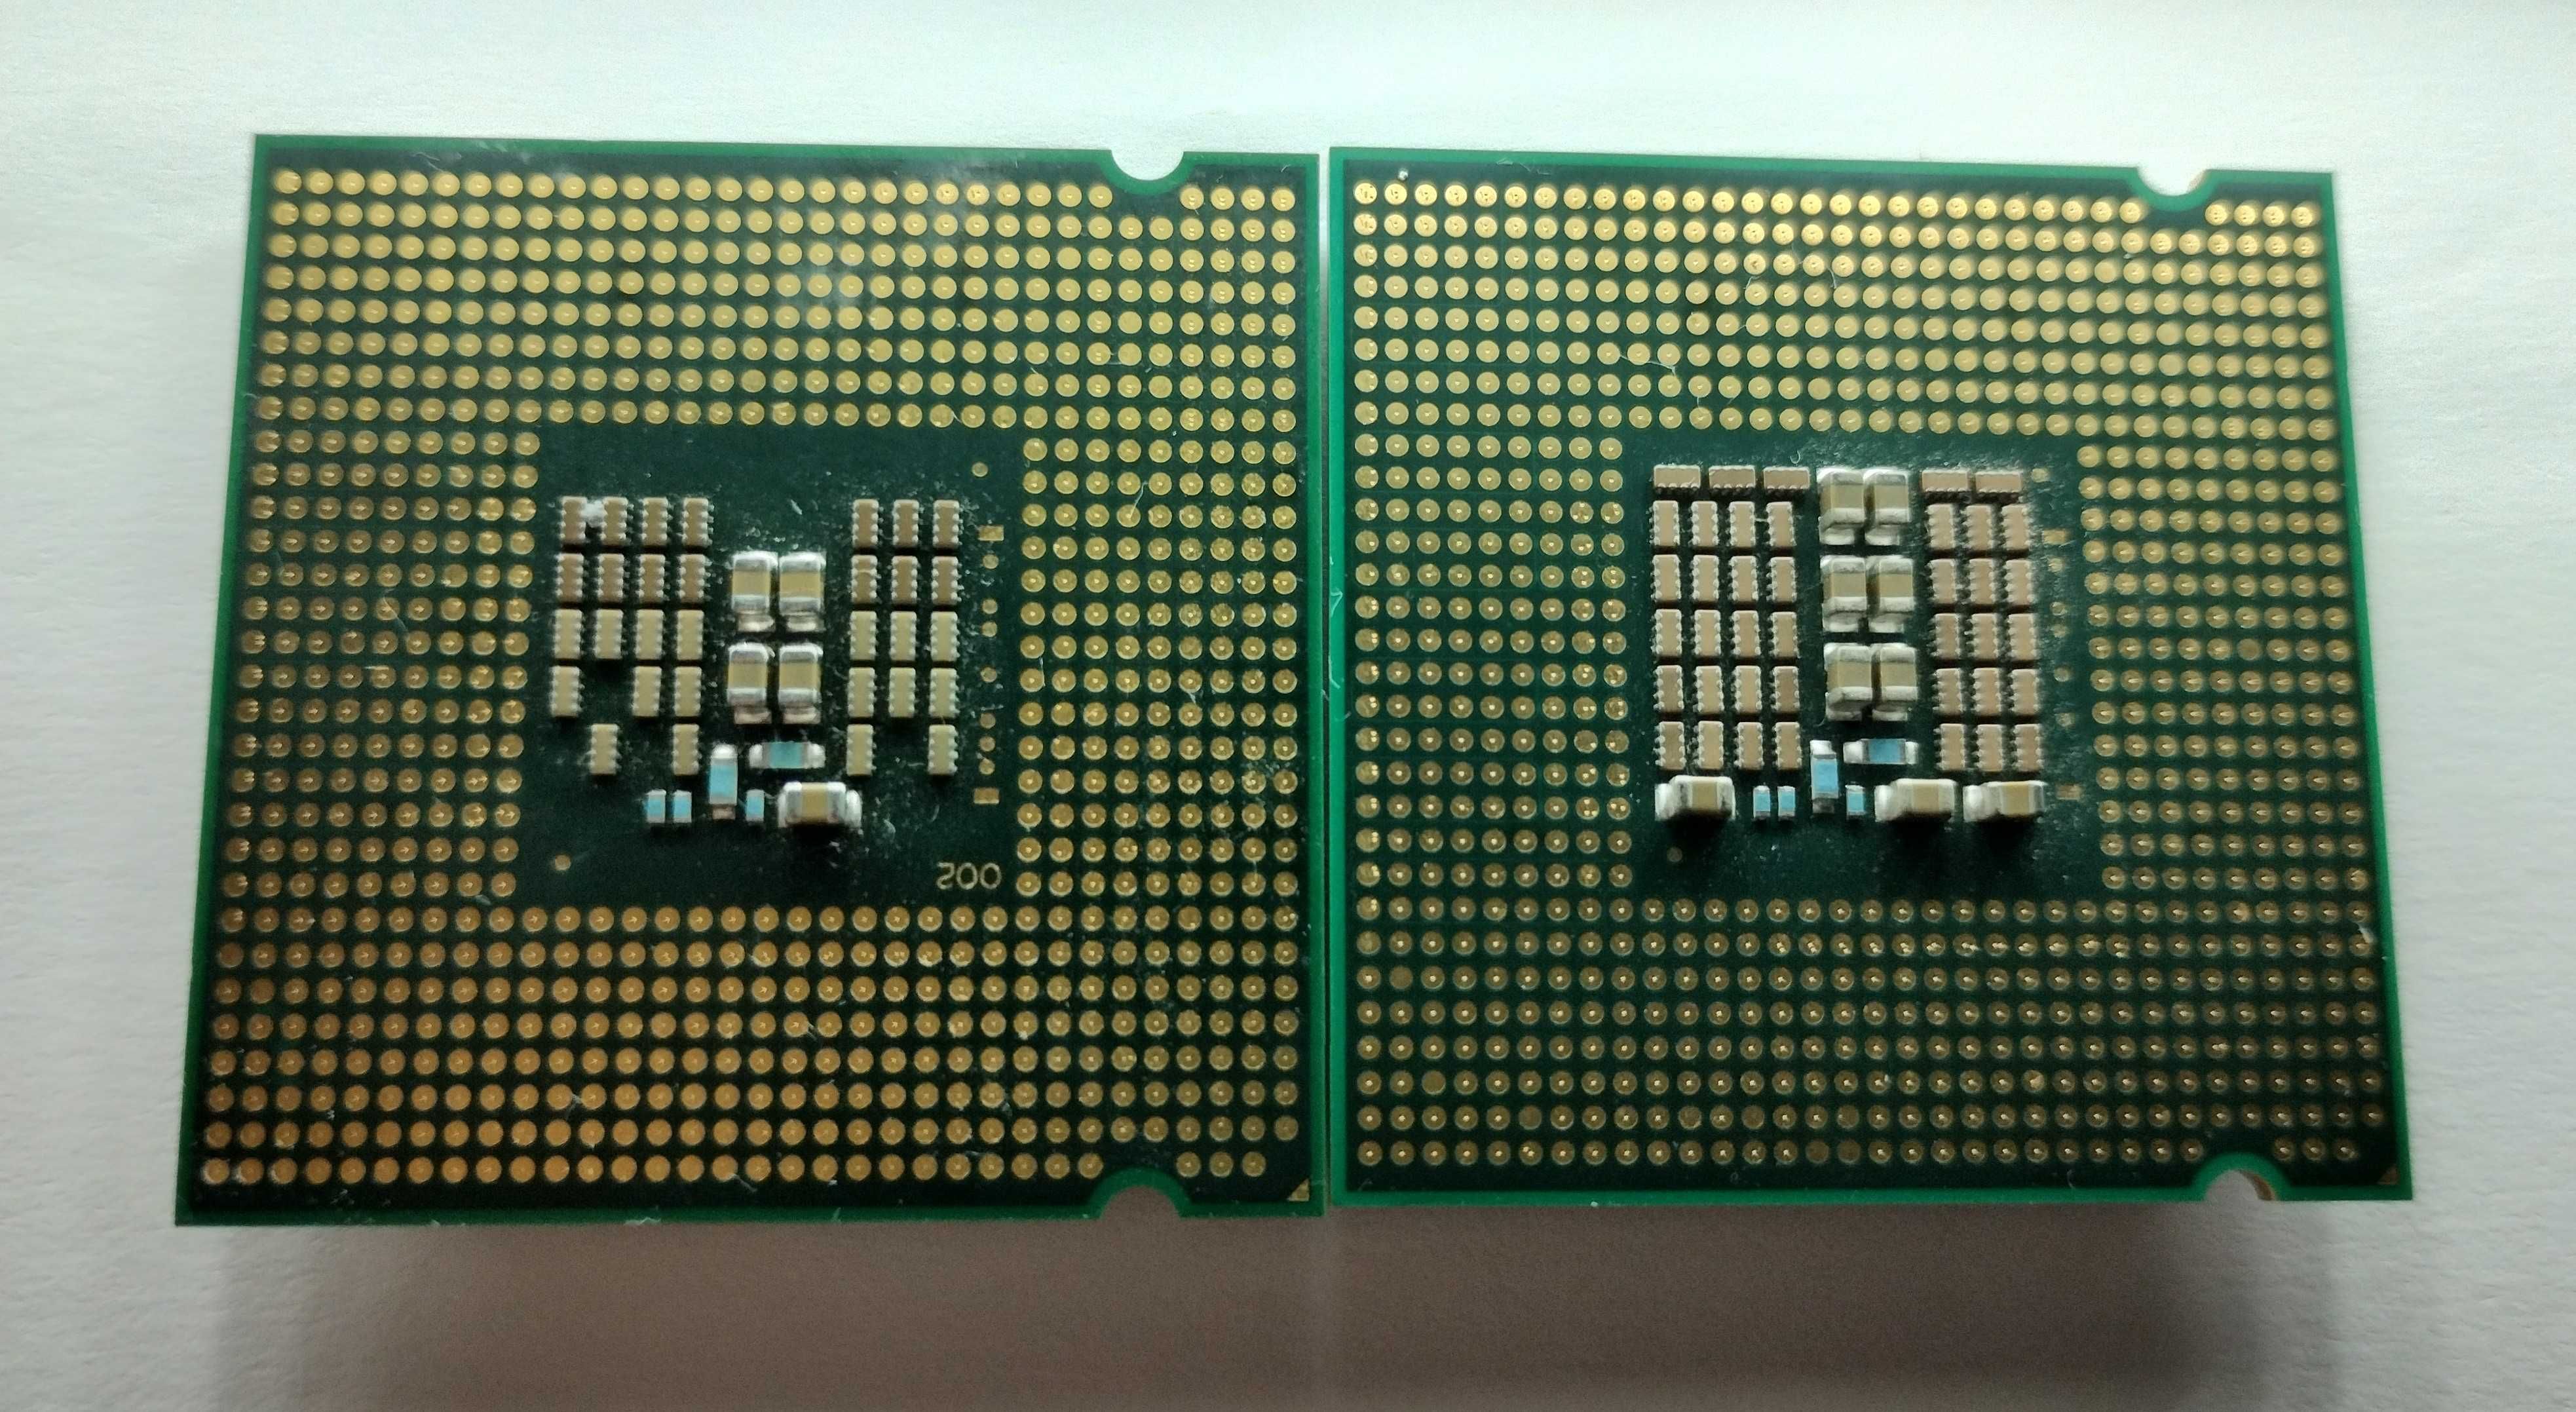 Lot 2 x Procesor Intel Core2 Quad Q8300 2.5GHz, socket 775